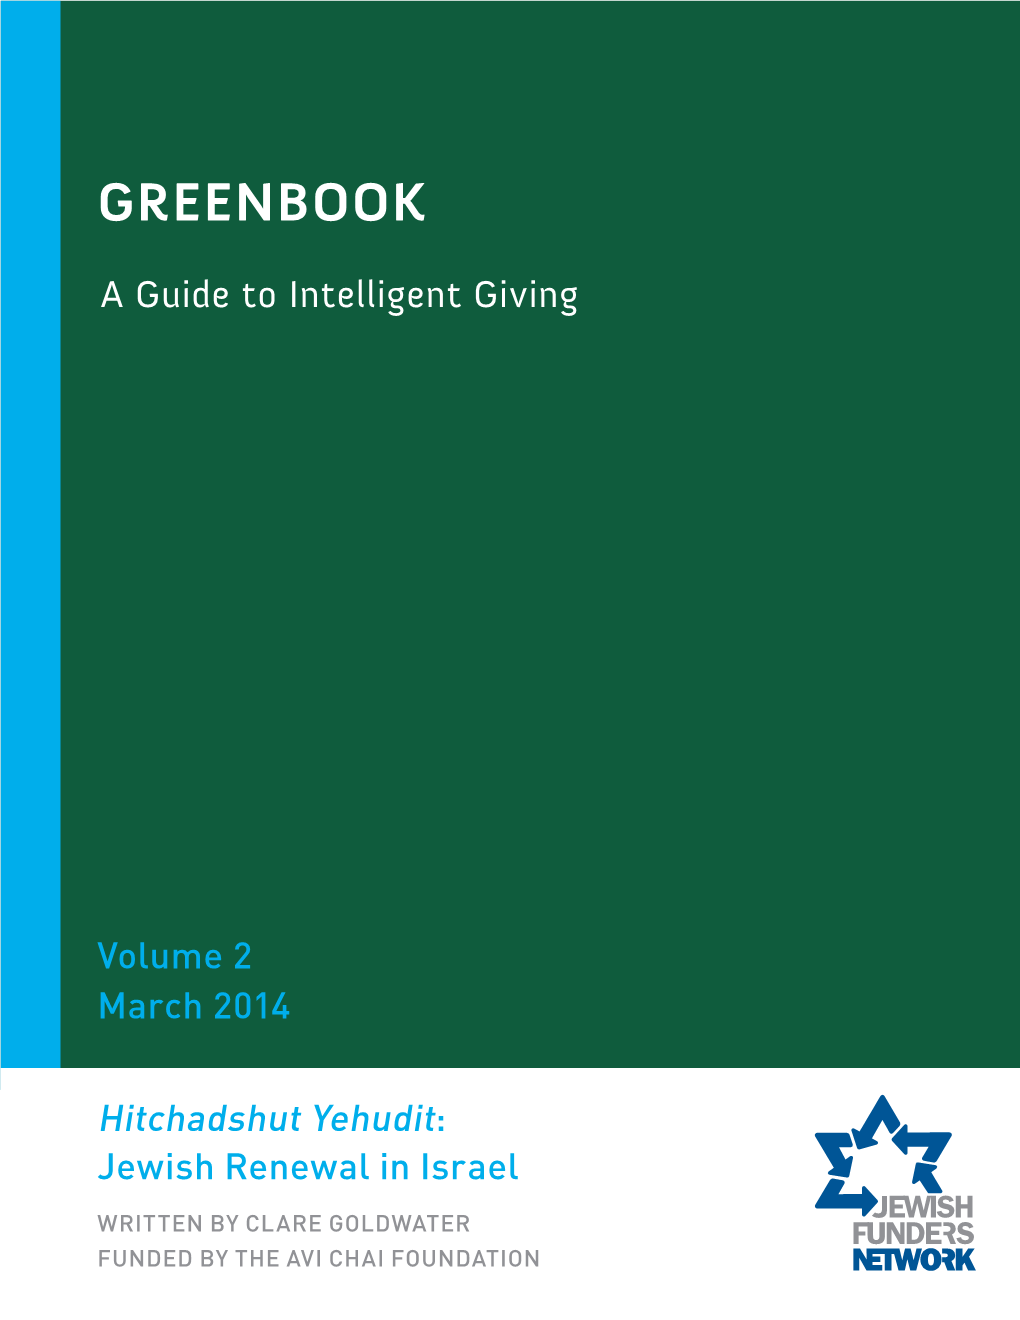 Greenbook: Jewish Renewal in Israel